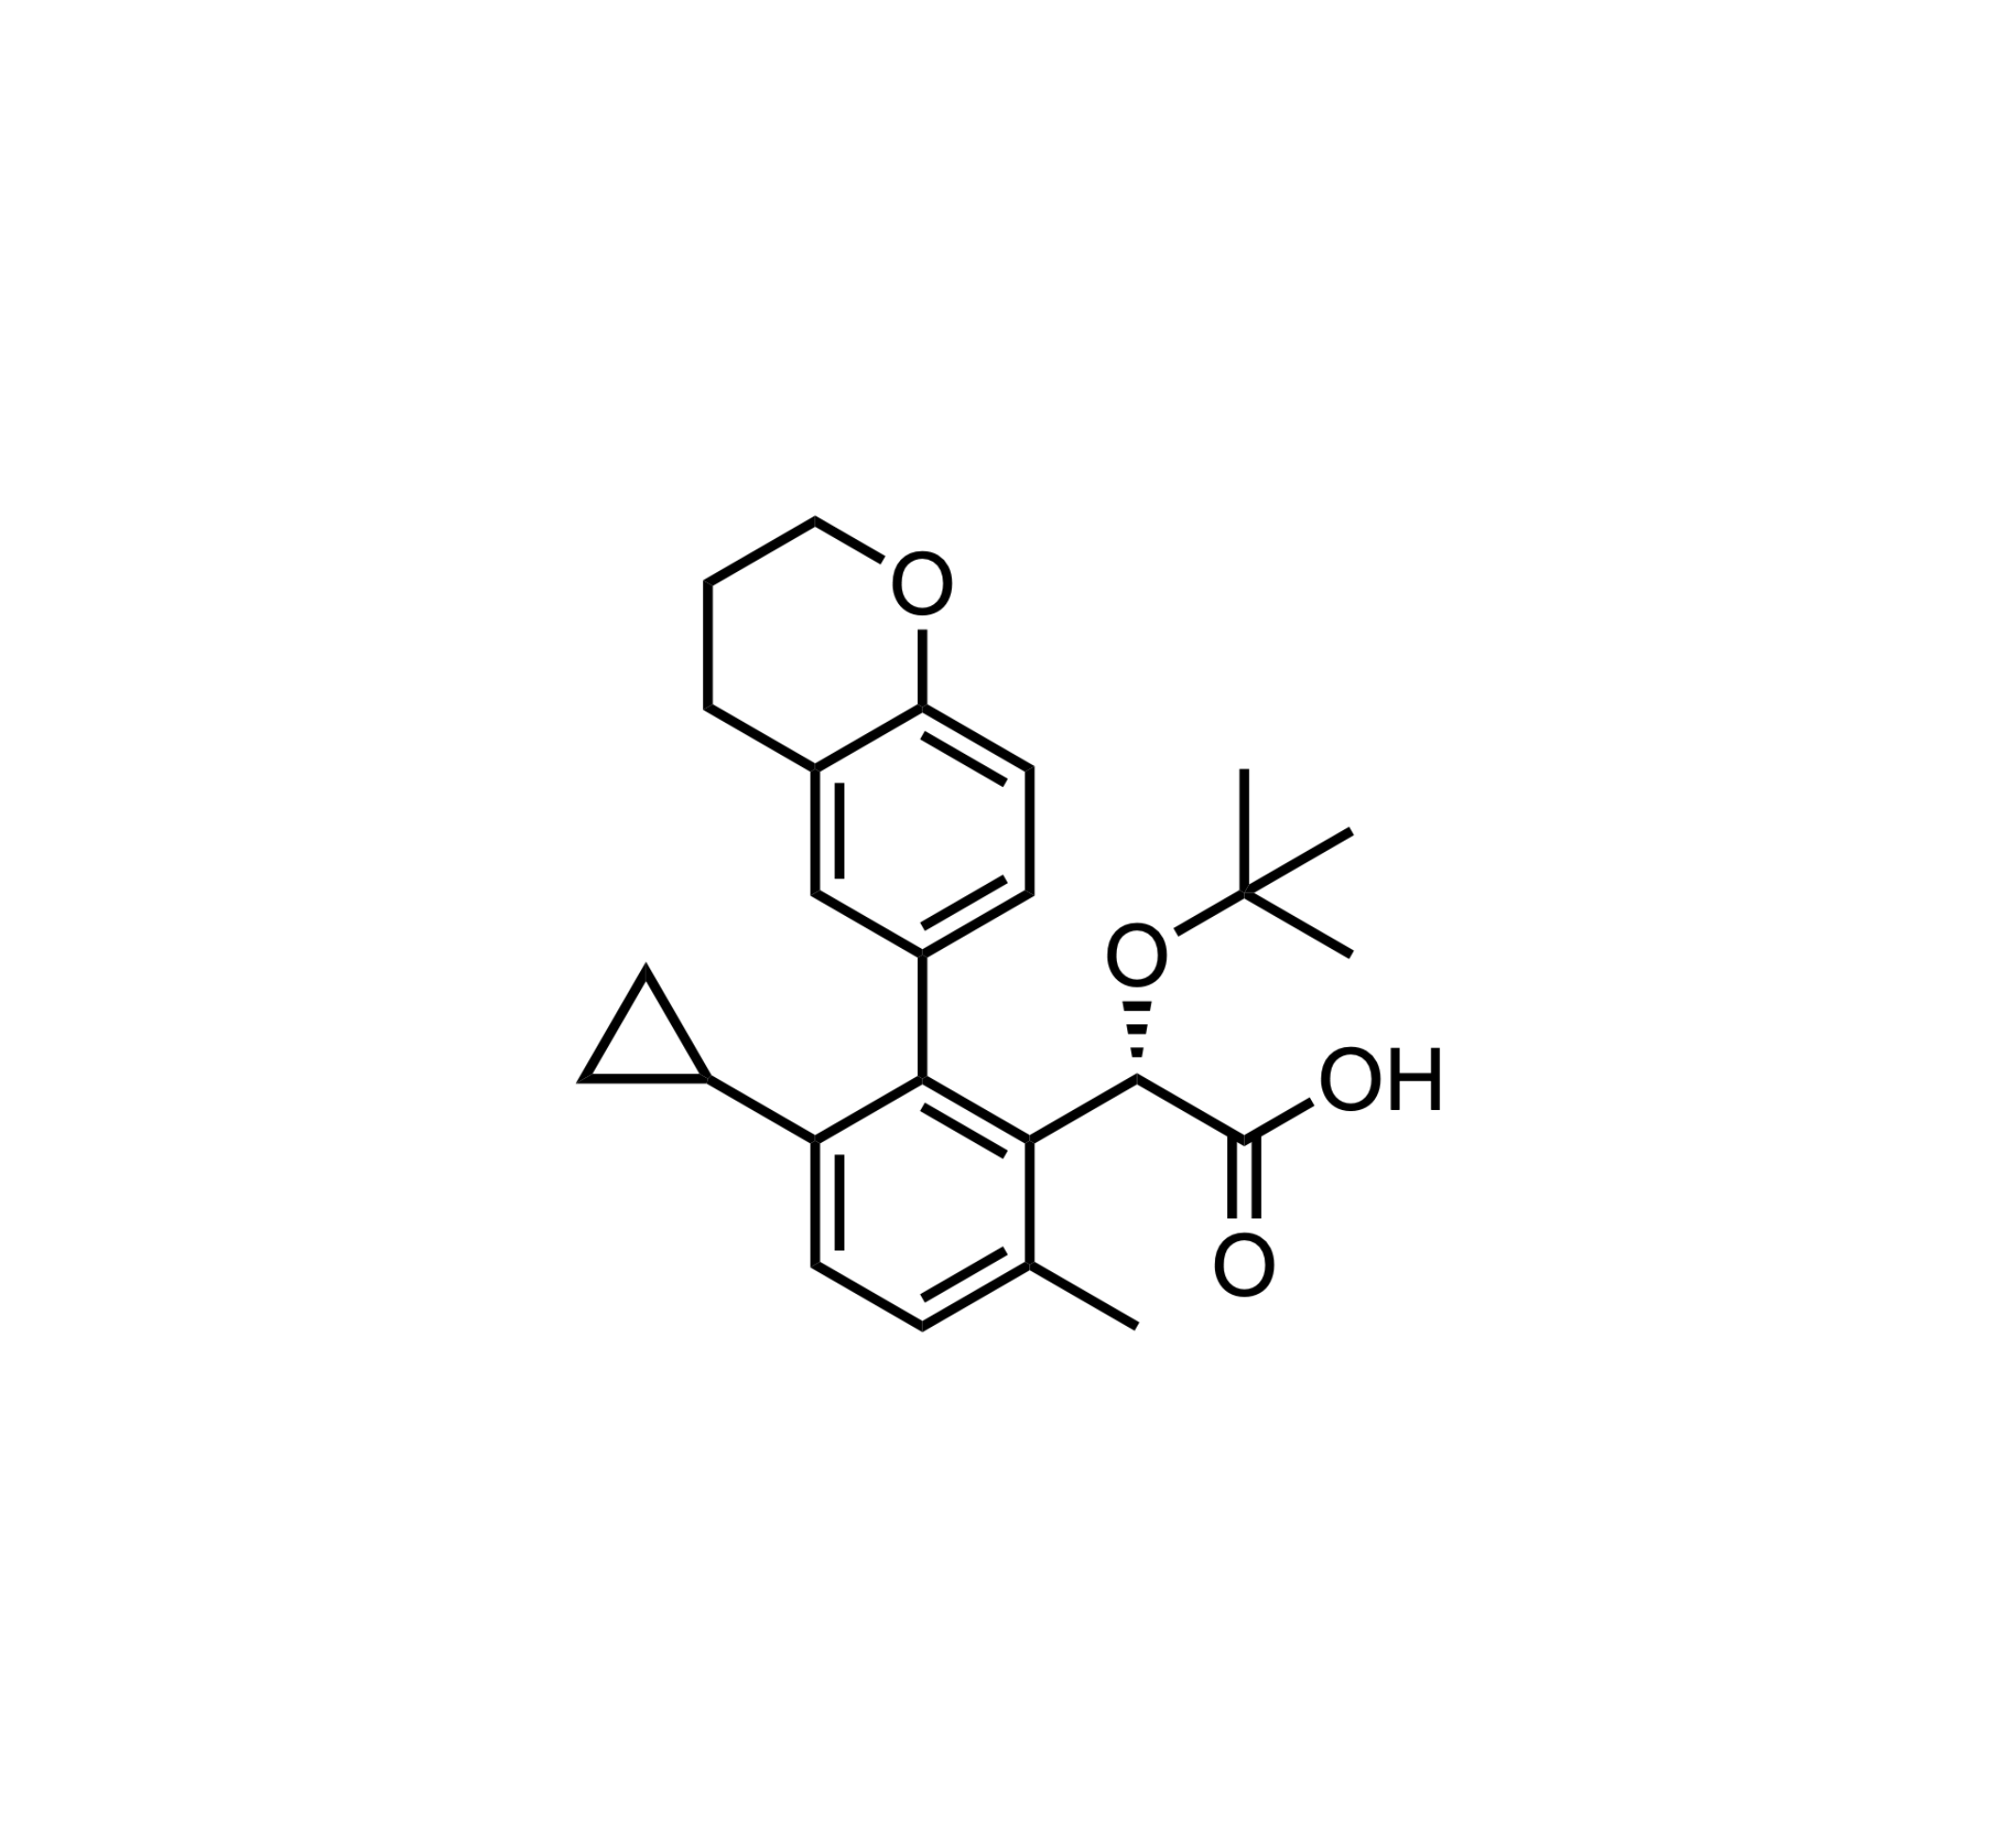 BDM2 chemical structure oral, HIV-1 IN-LEDGF/p75 allosteric inhibitor - Biodim, Romainville, FR|||